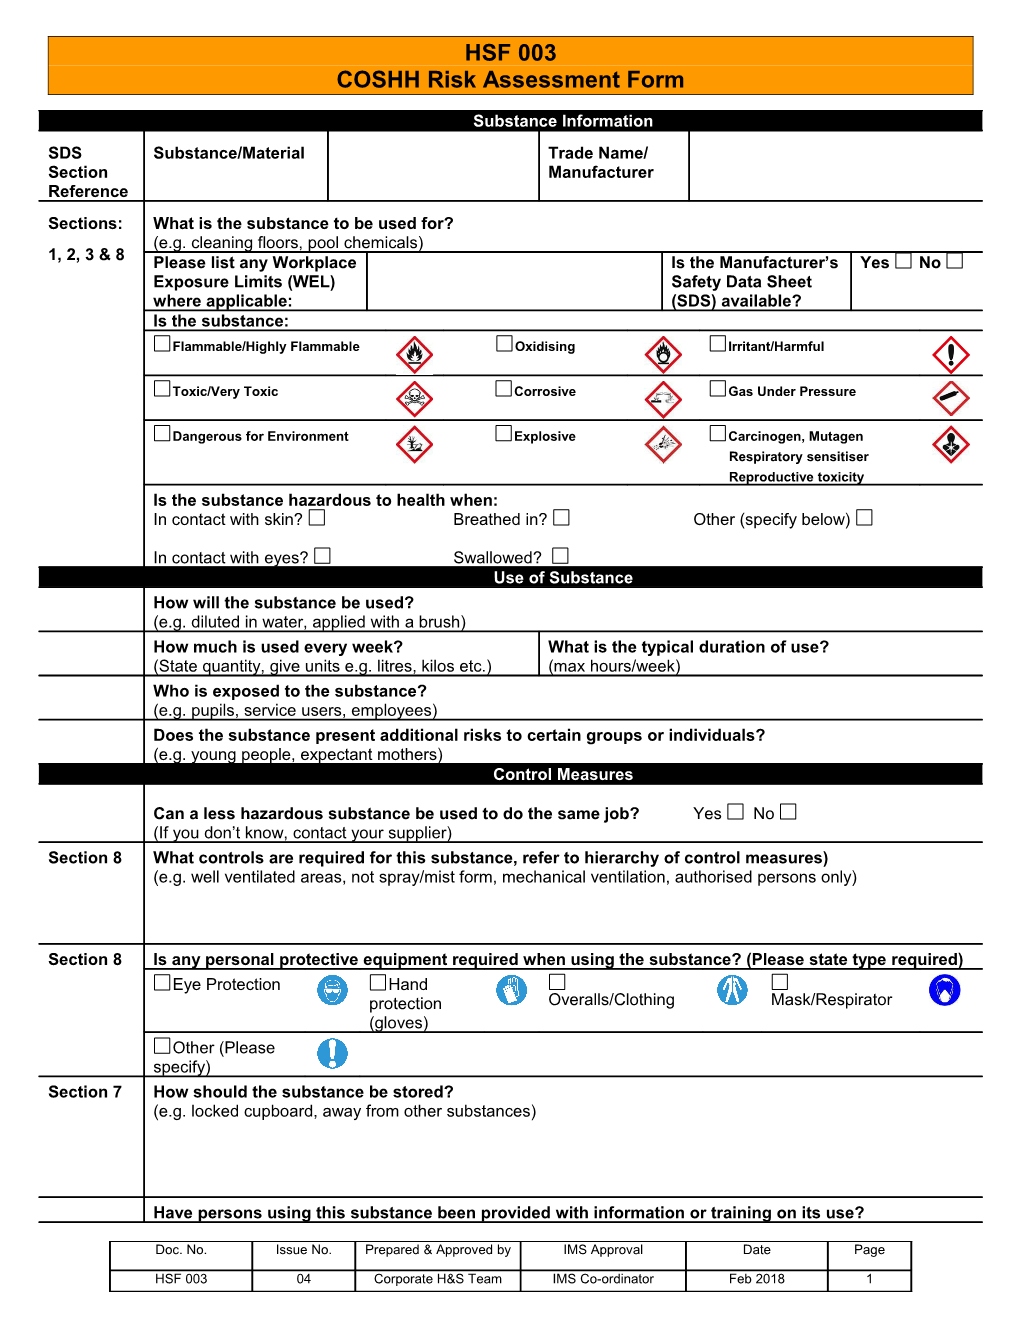 COSHH Assessment Form